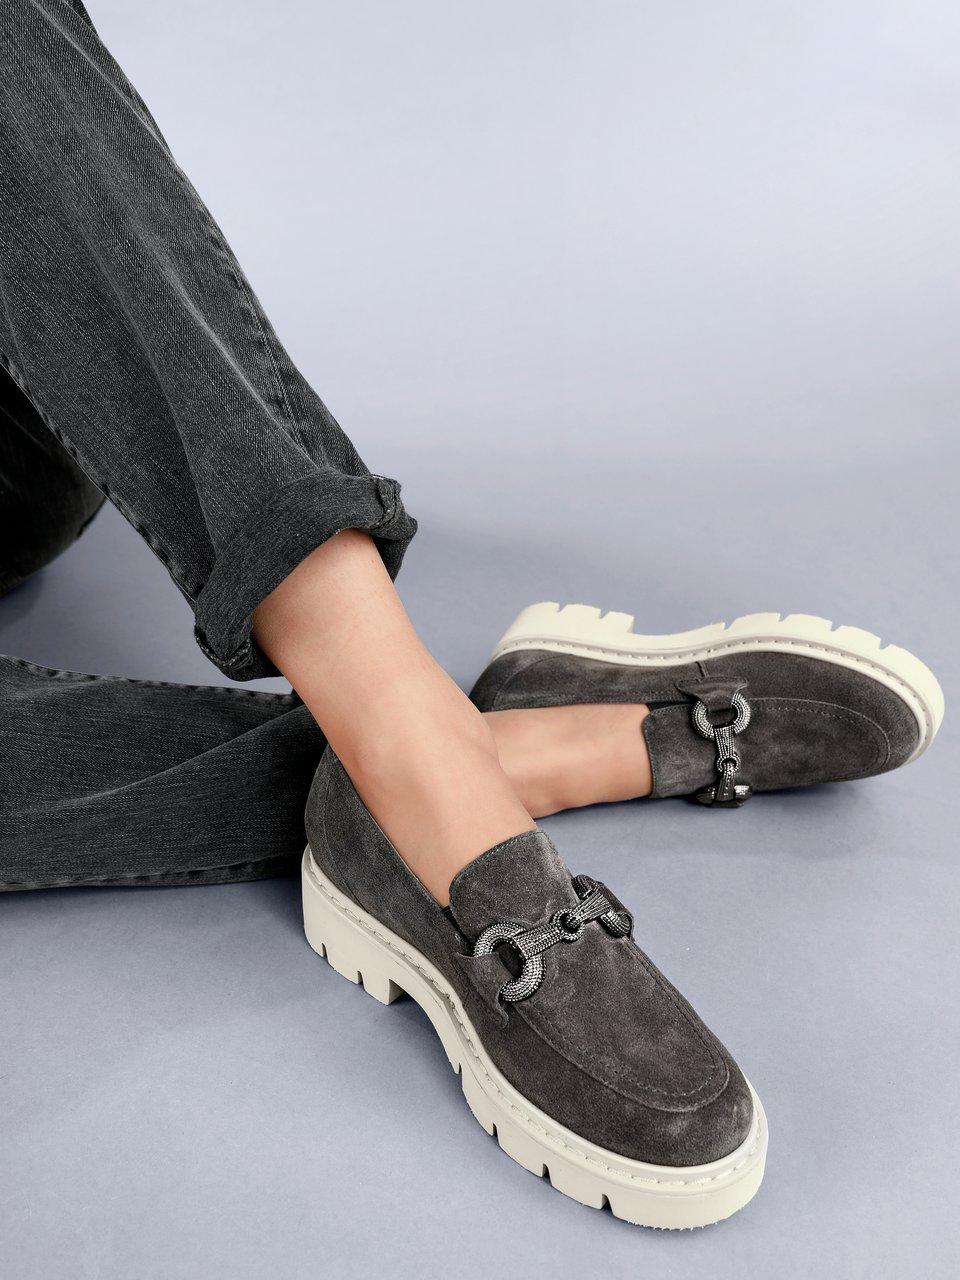 kran Wetland selvbiografi Paul Green - Loafers in calf suede leather - grey